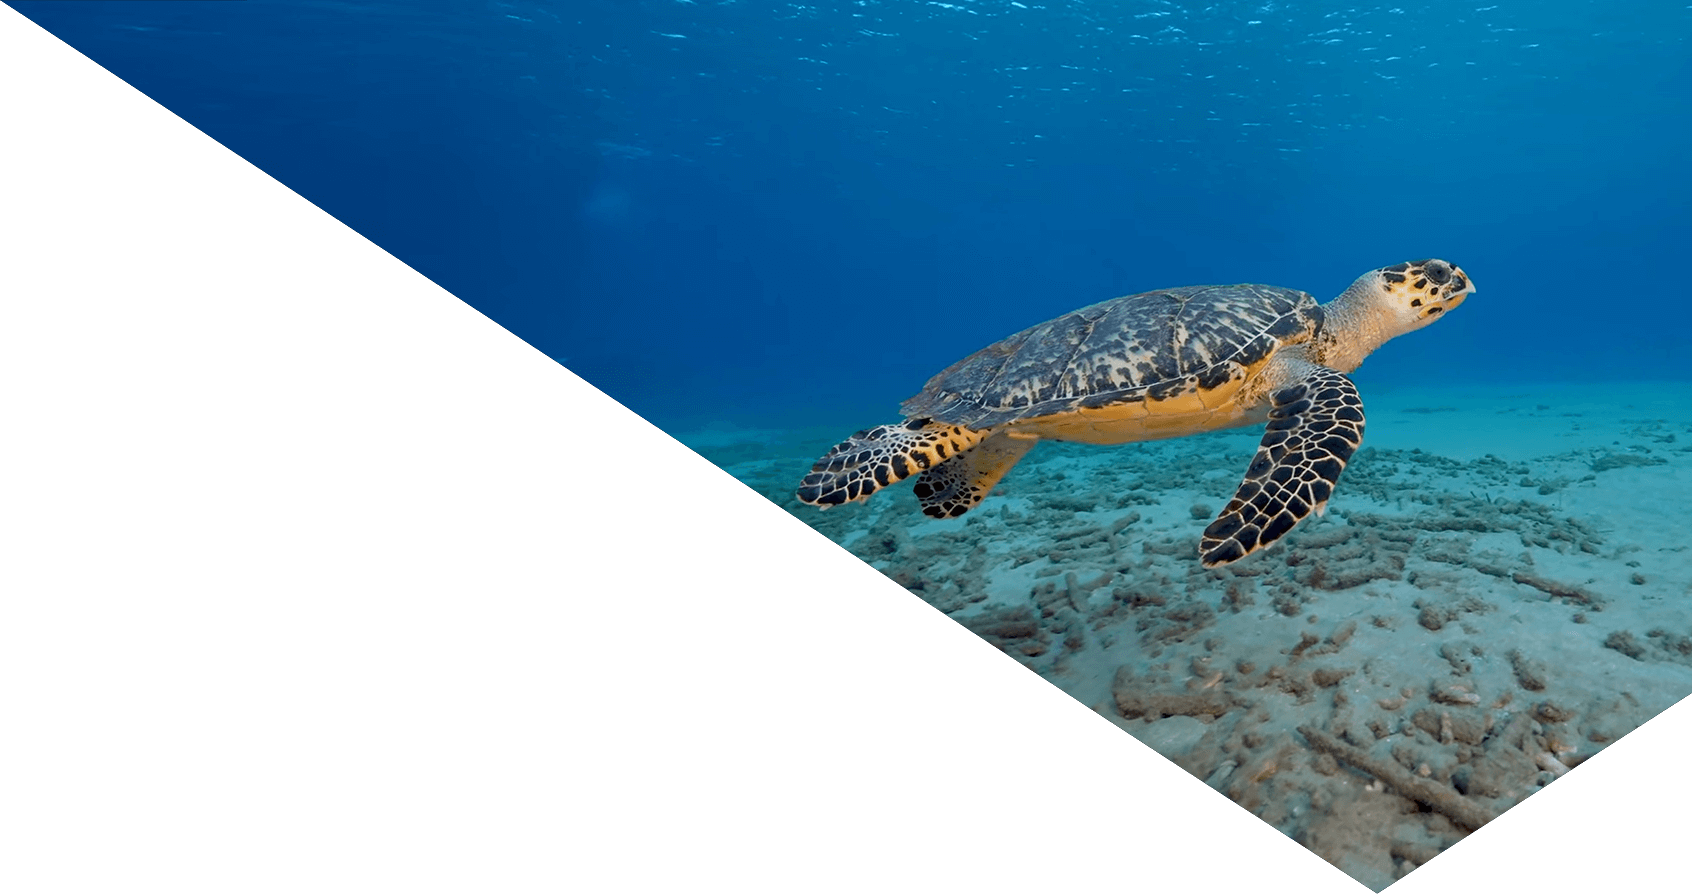 Image showing a sea turtle in the ocean floor